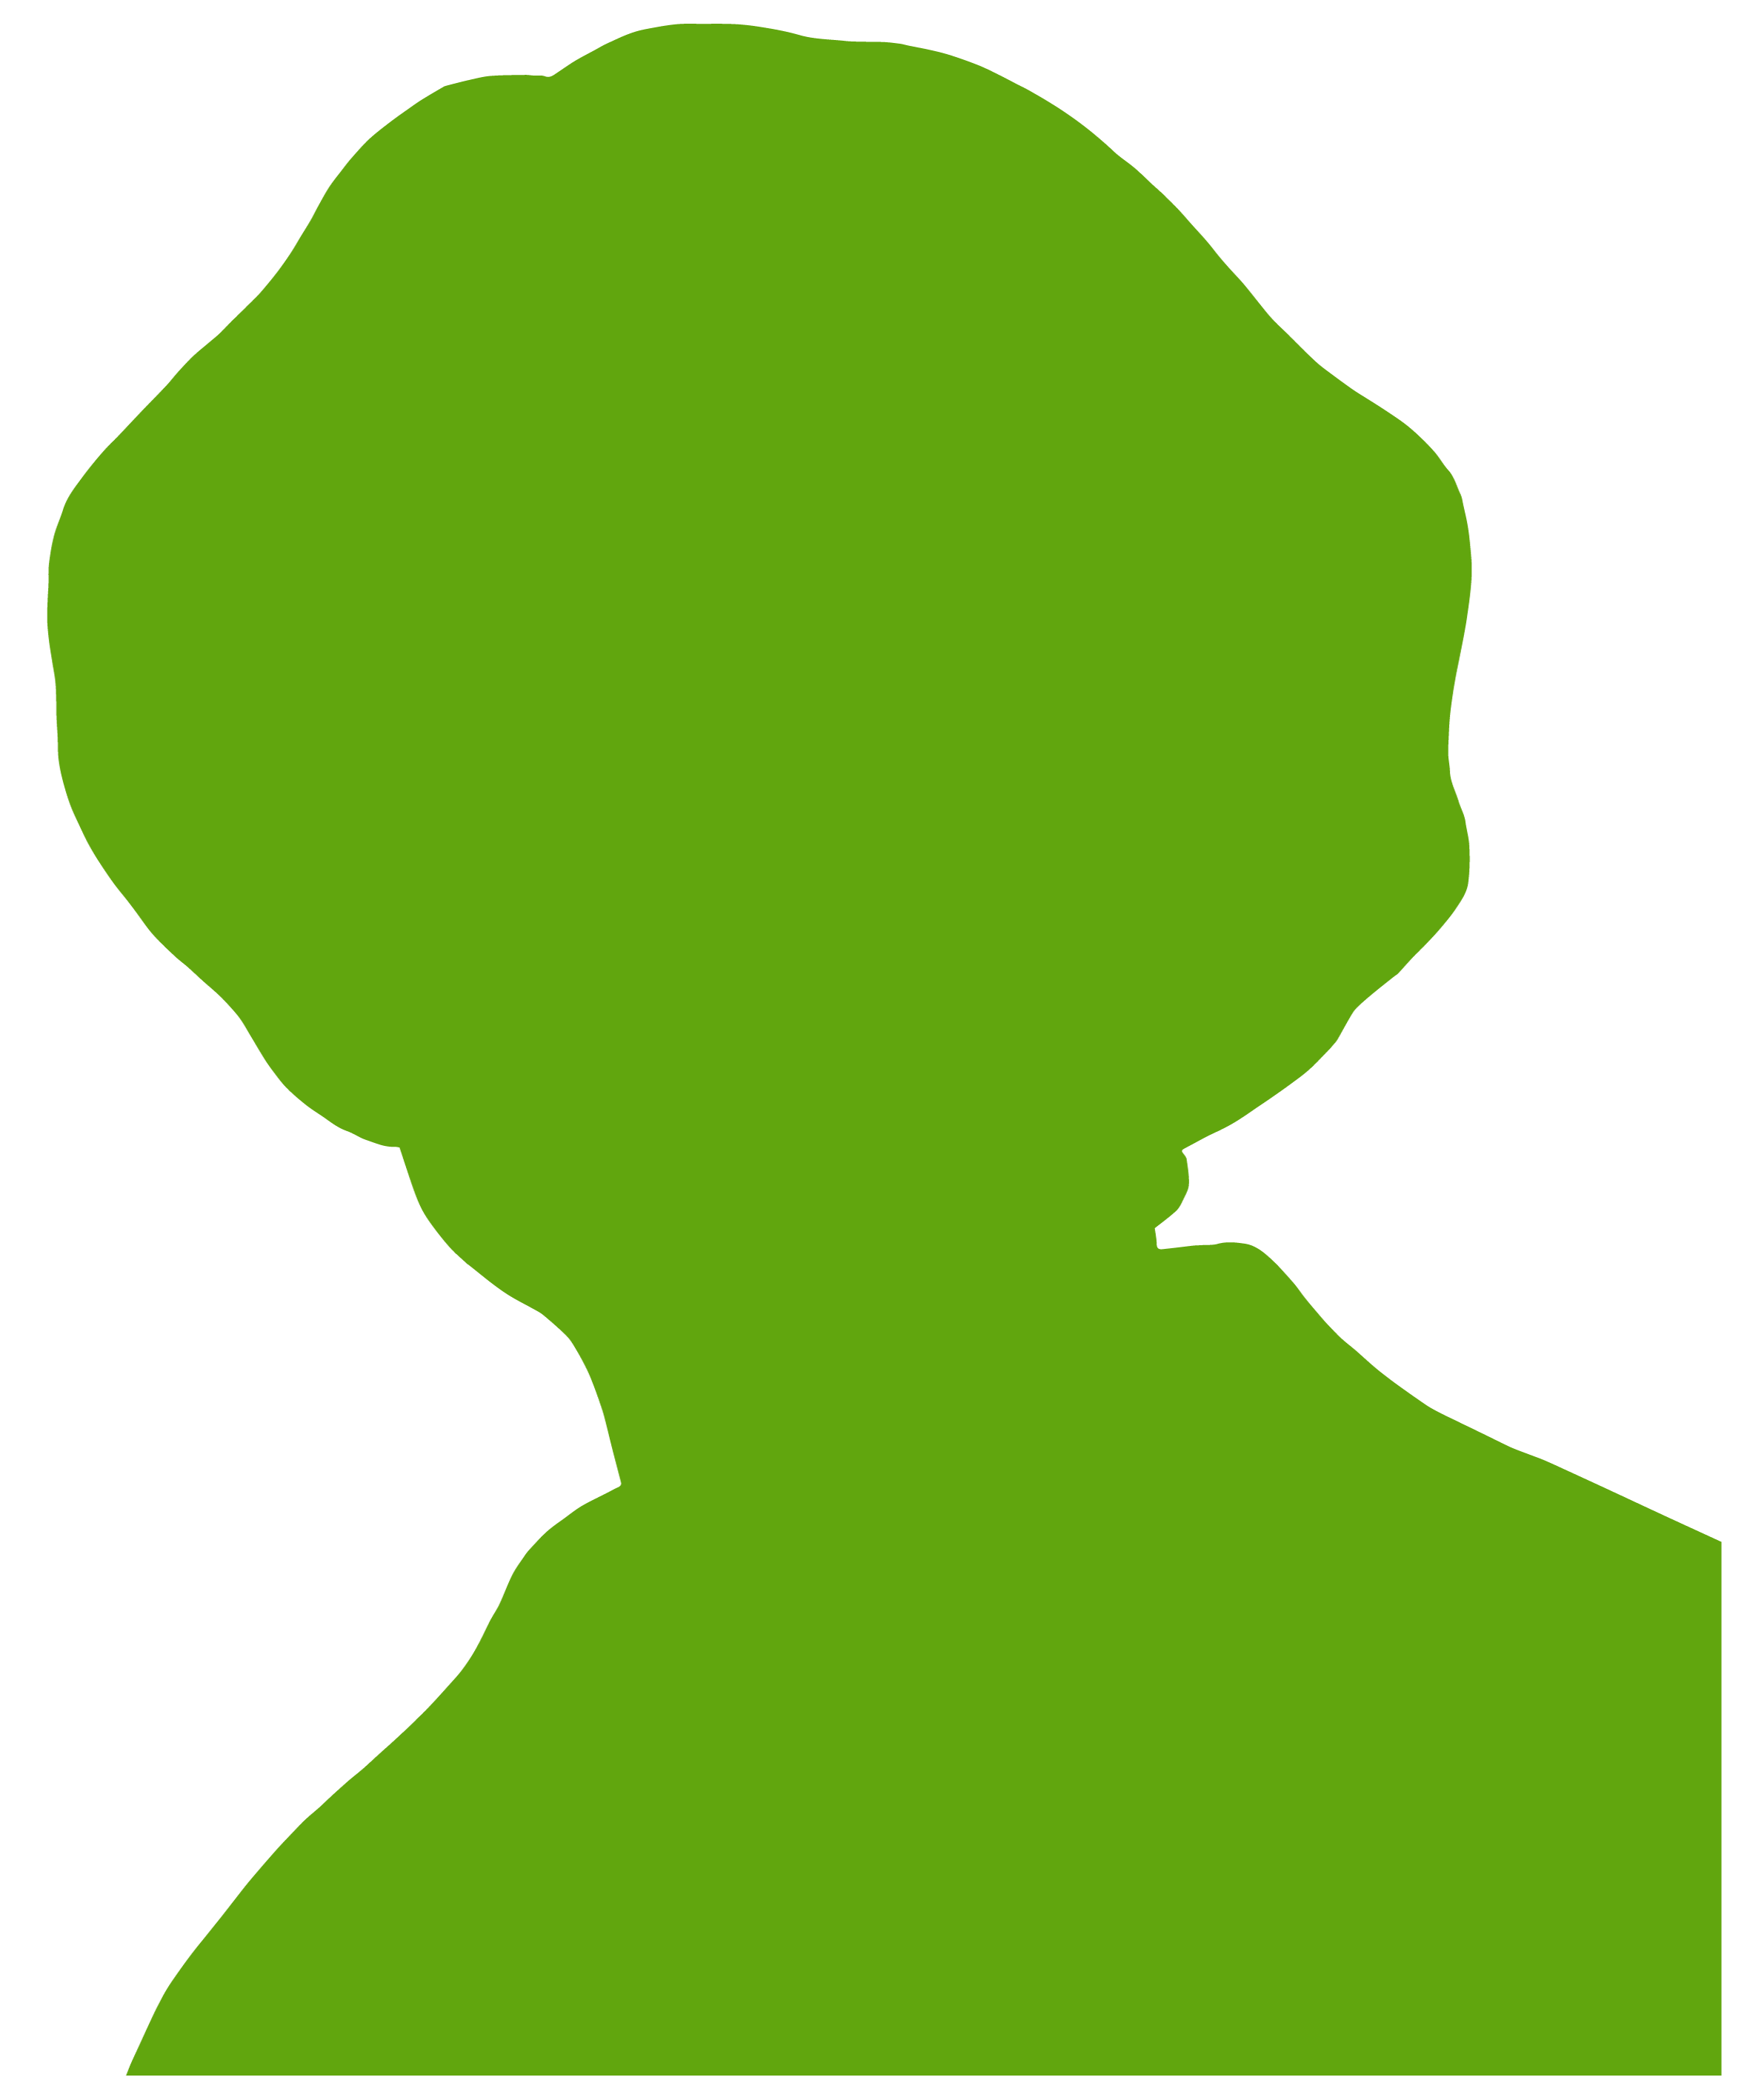 Green silhouette of Annie Rhoda Craig or Walker